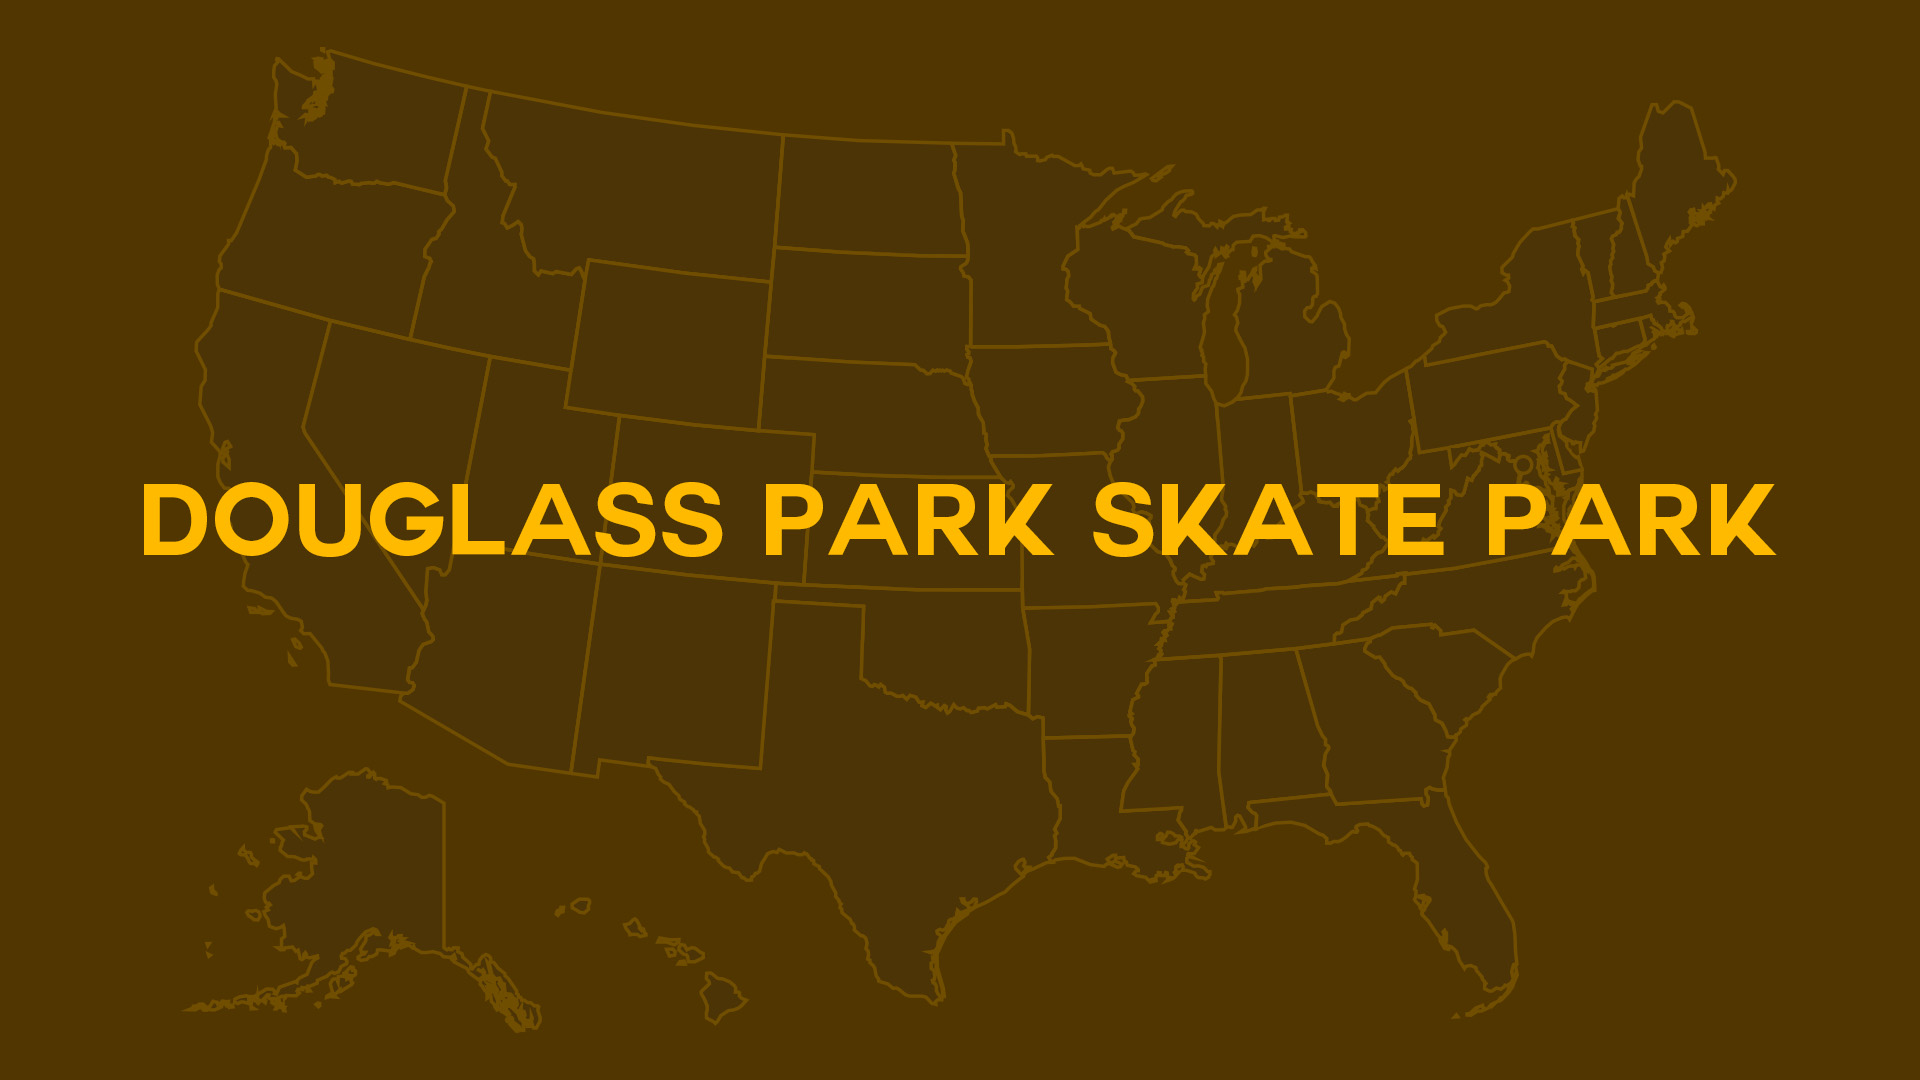 Title card for Douglass Park Skate Park